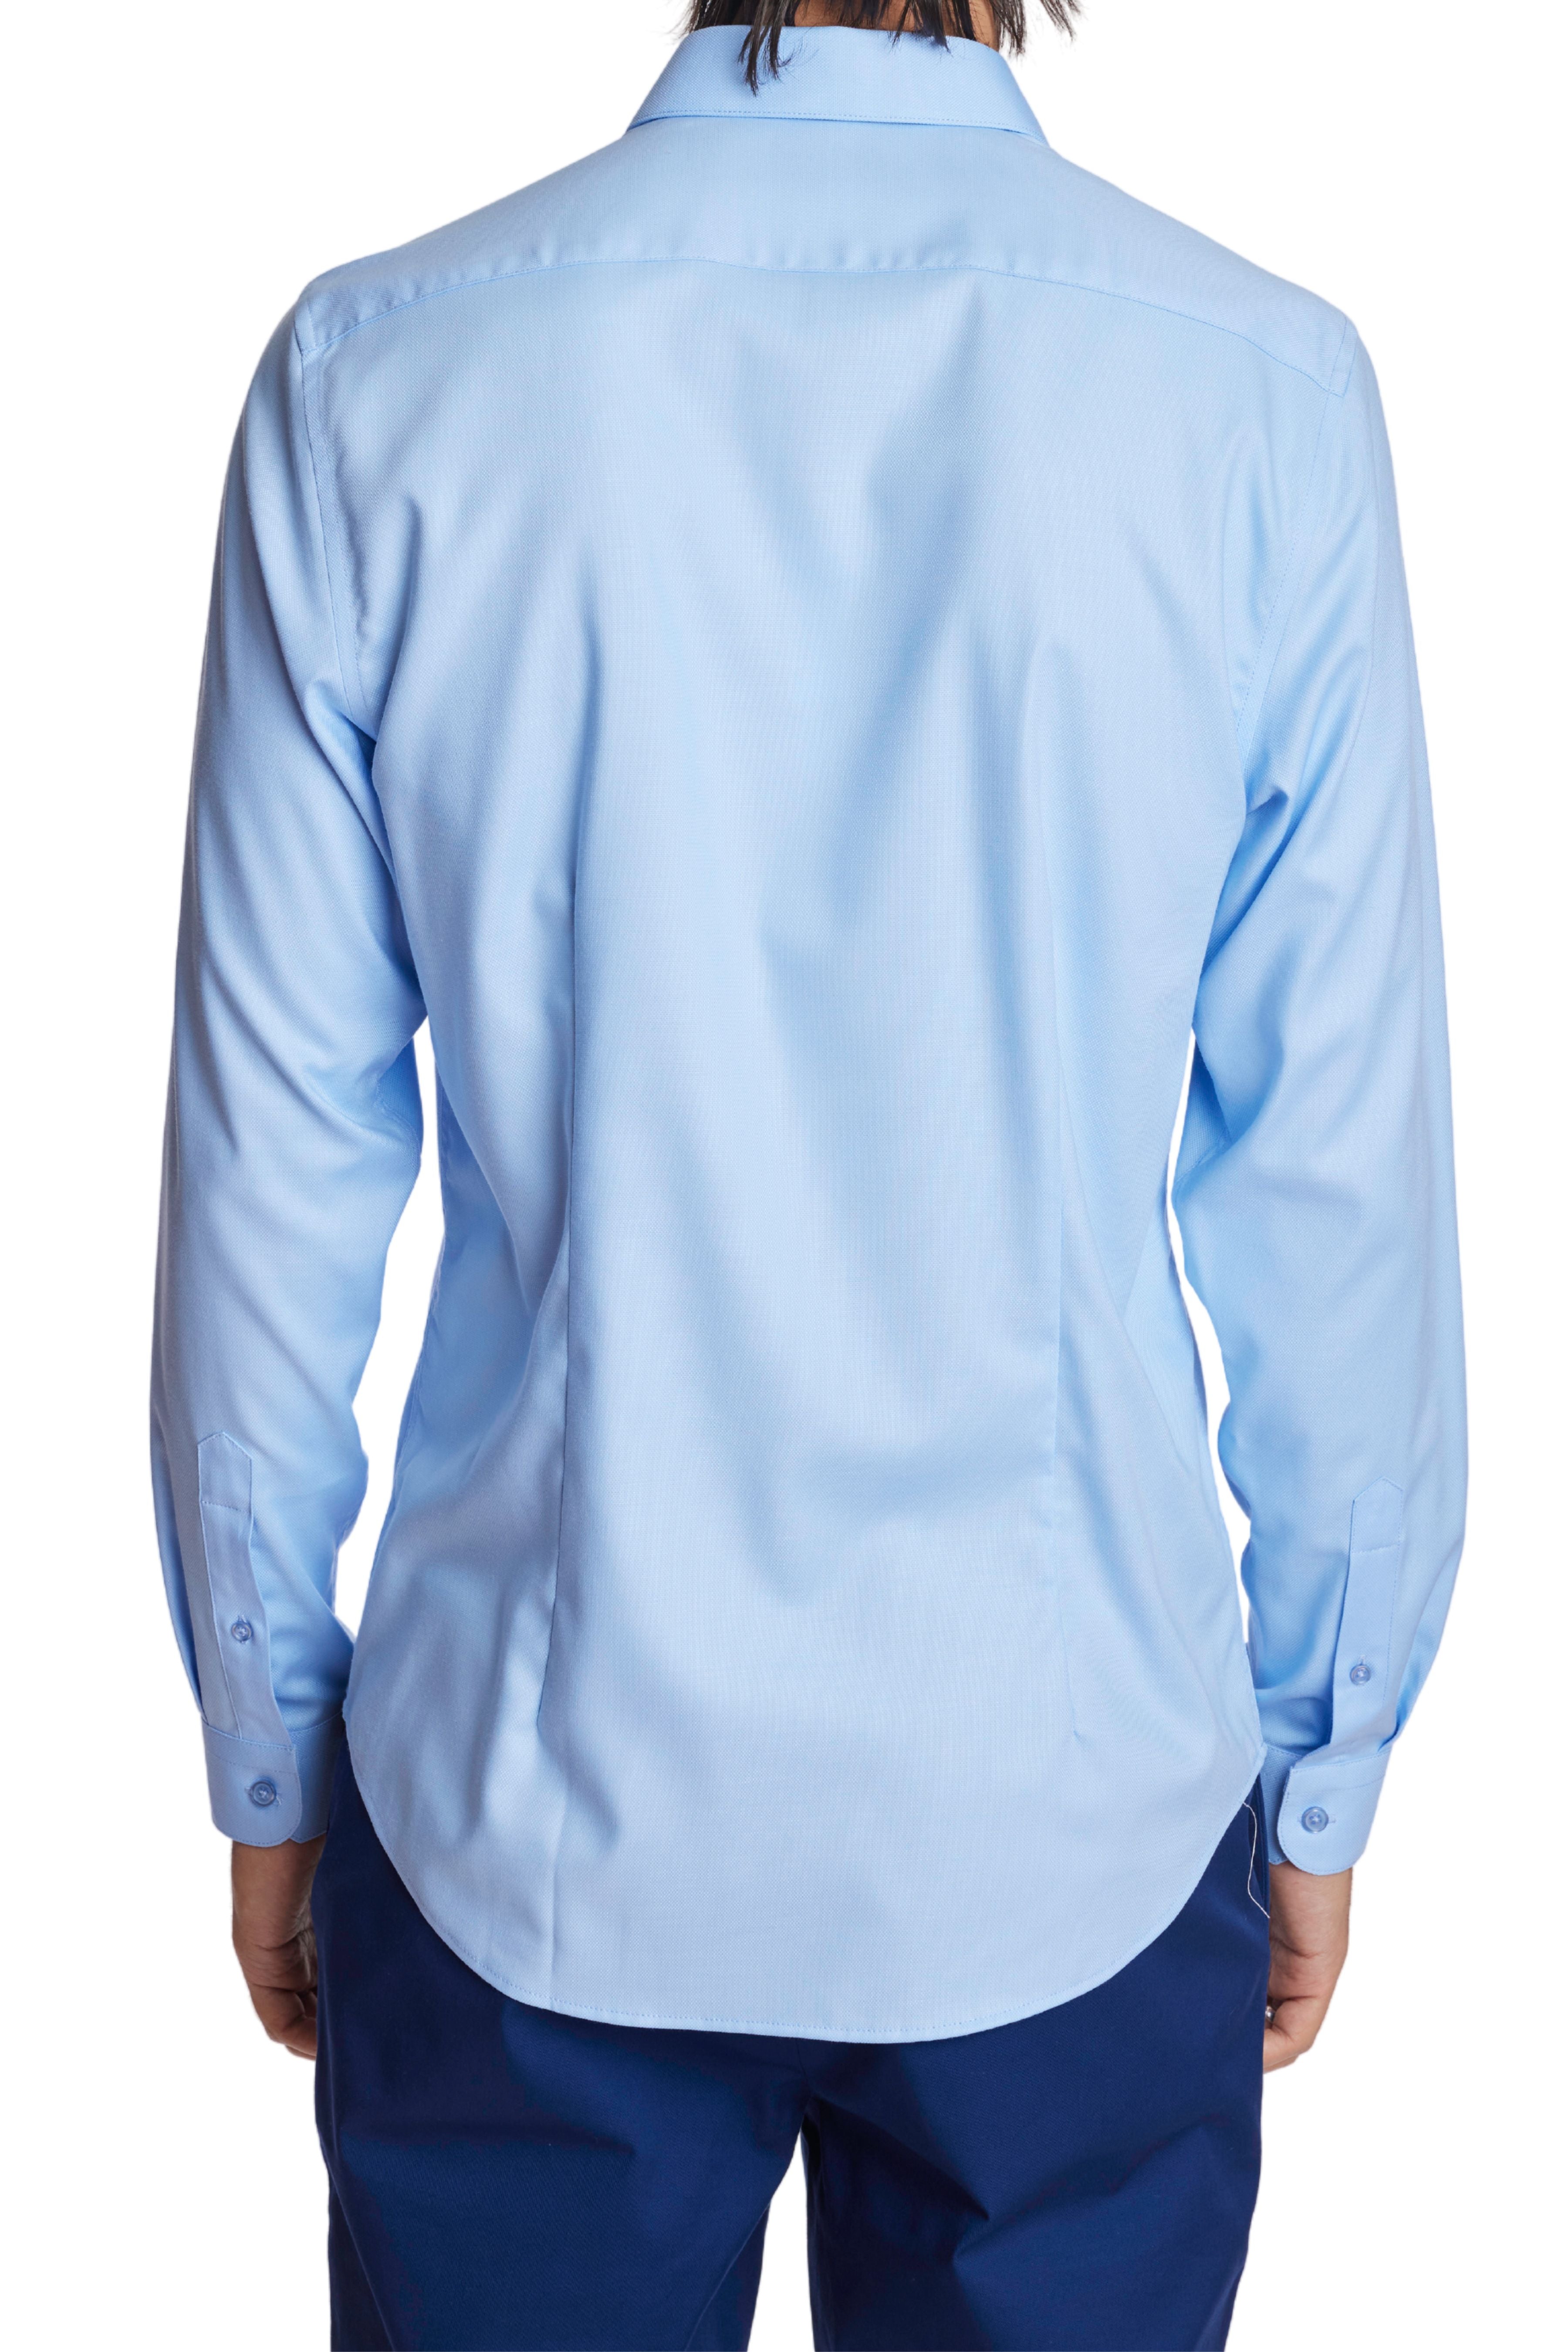 Samuel Spread Collar Shirt - Baby Blue